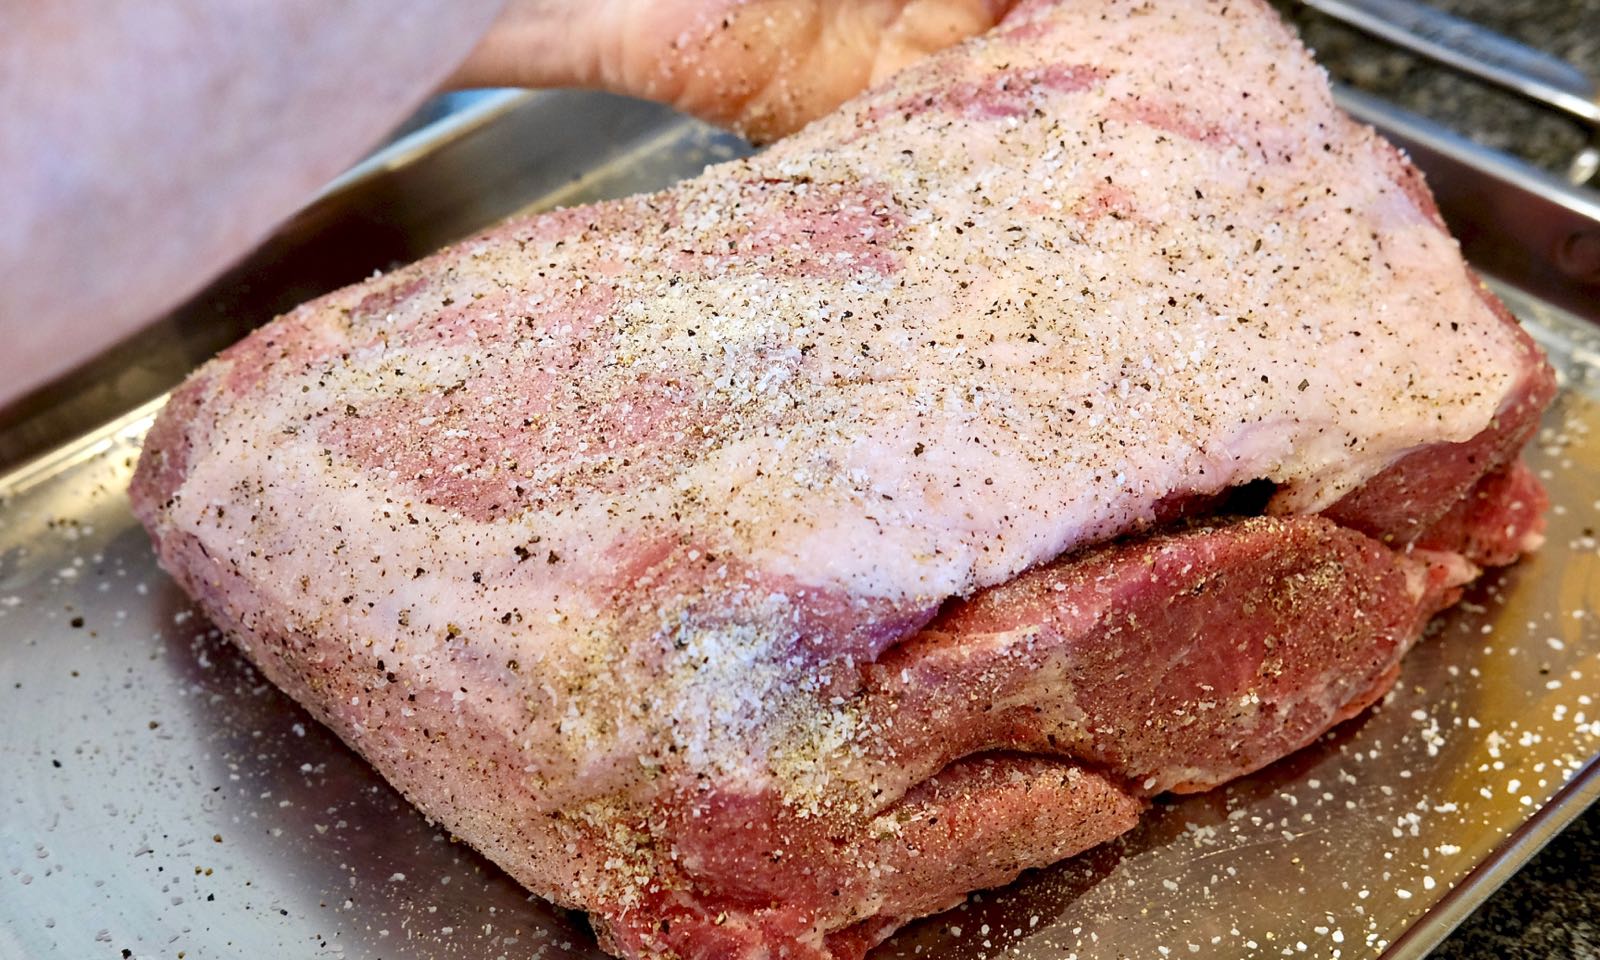 Pork Butt being seasoned on a stainless baking sheet.